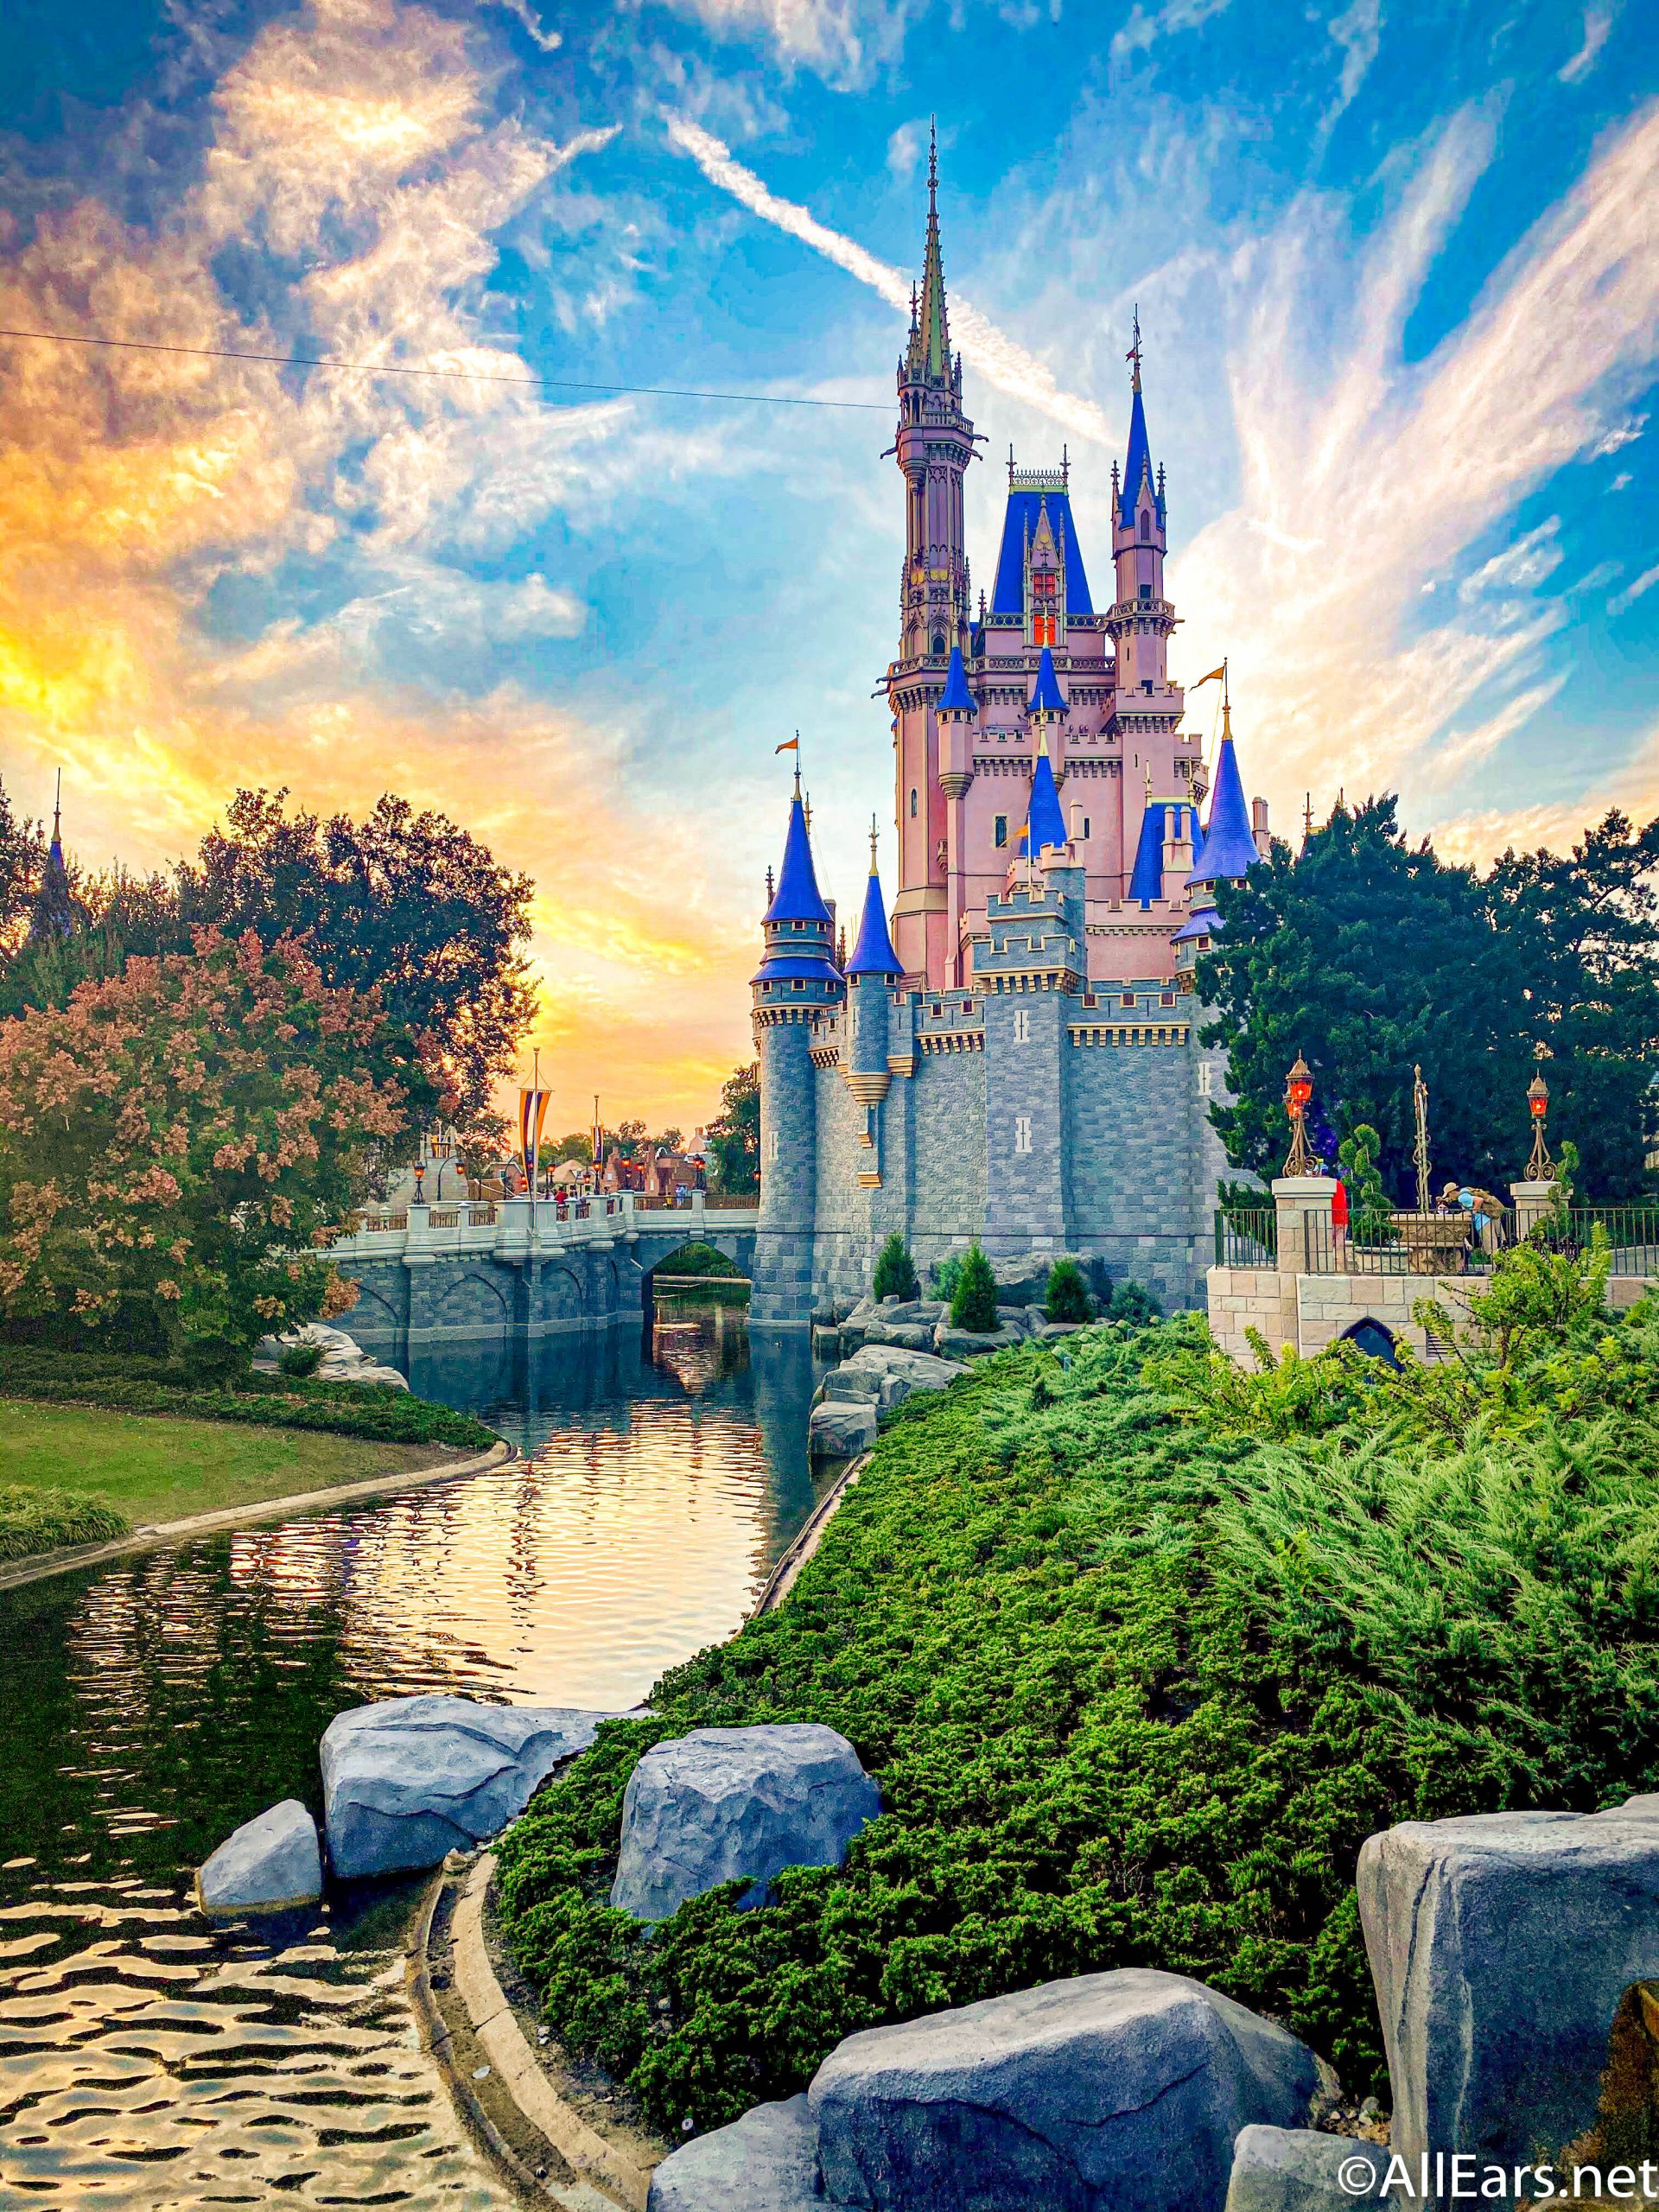 Stunning Disney World Wallpaper To Bring A Little Magic